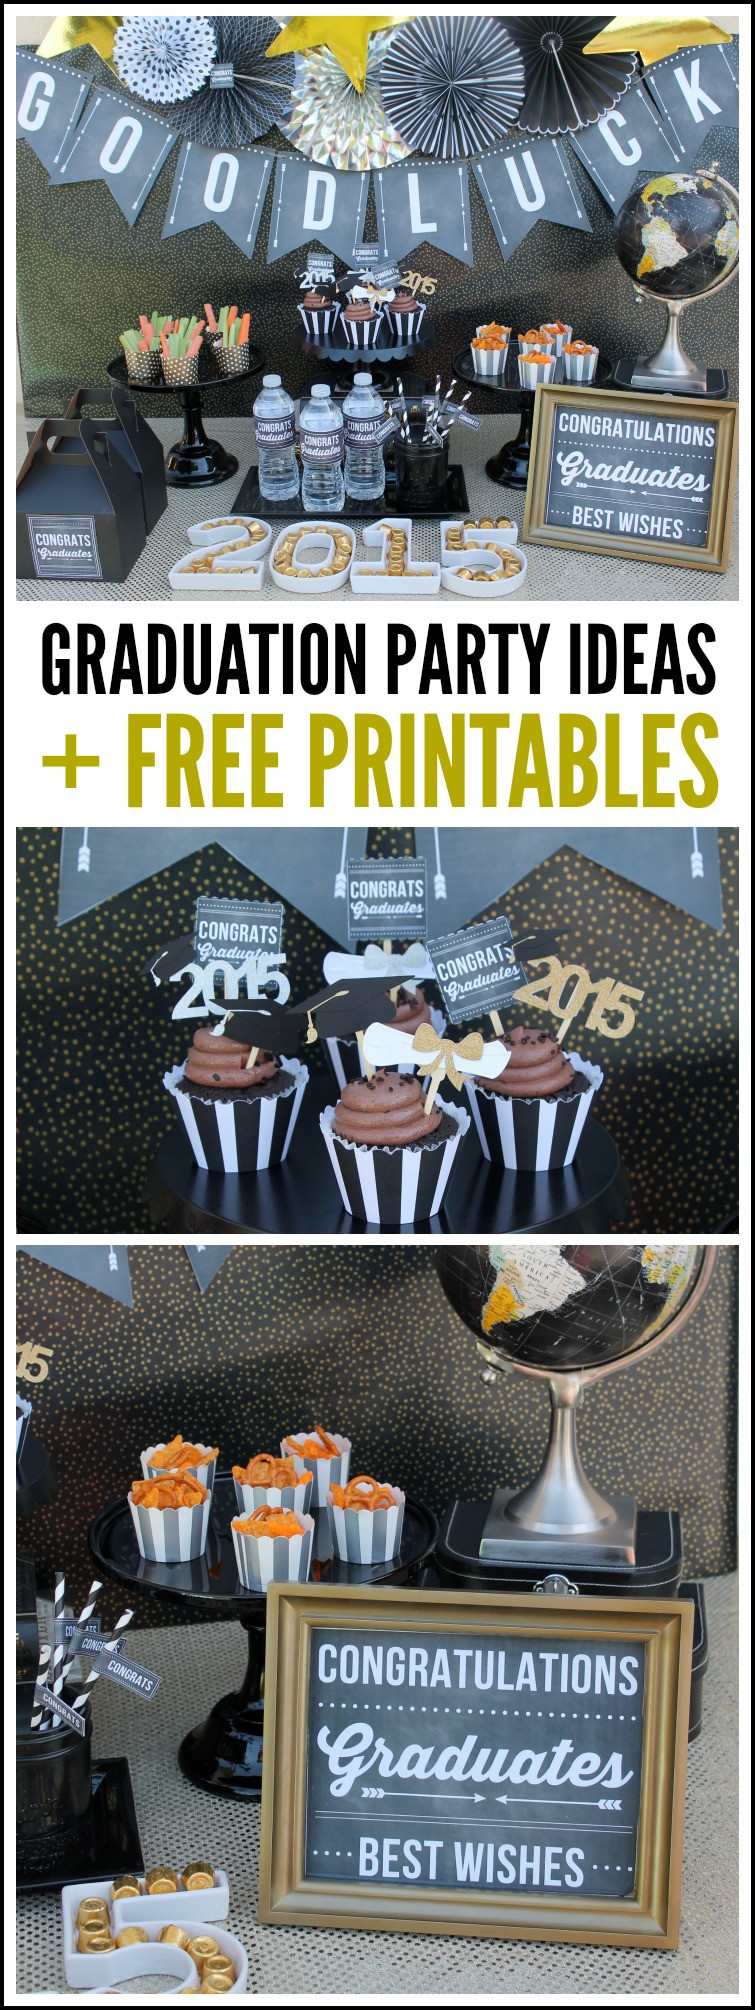 Ideas For Graduation Party Favors
 Graduation Party Ideas Free Printables